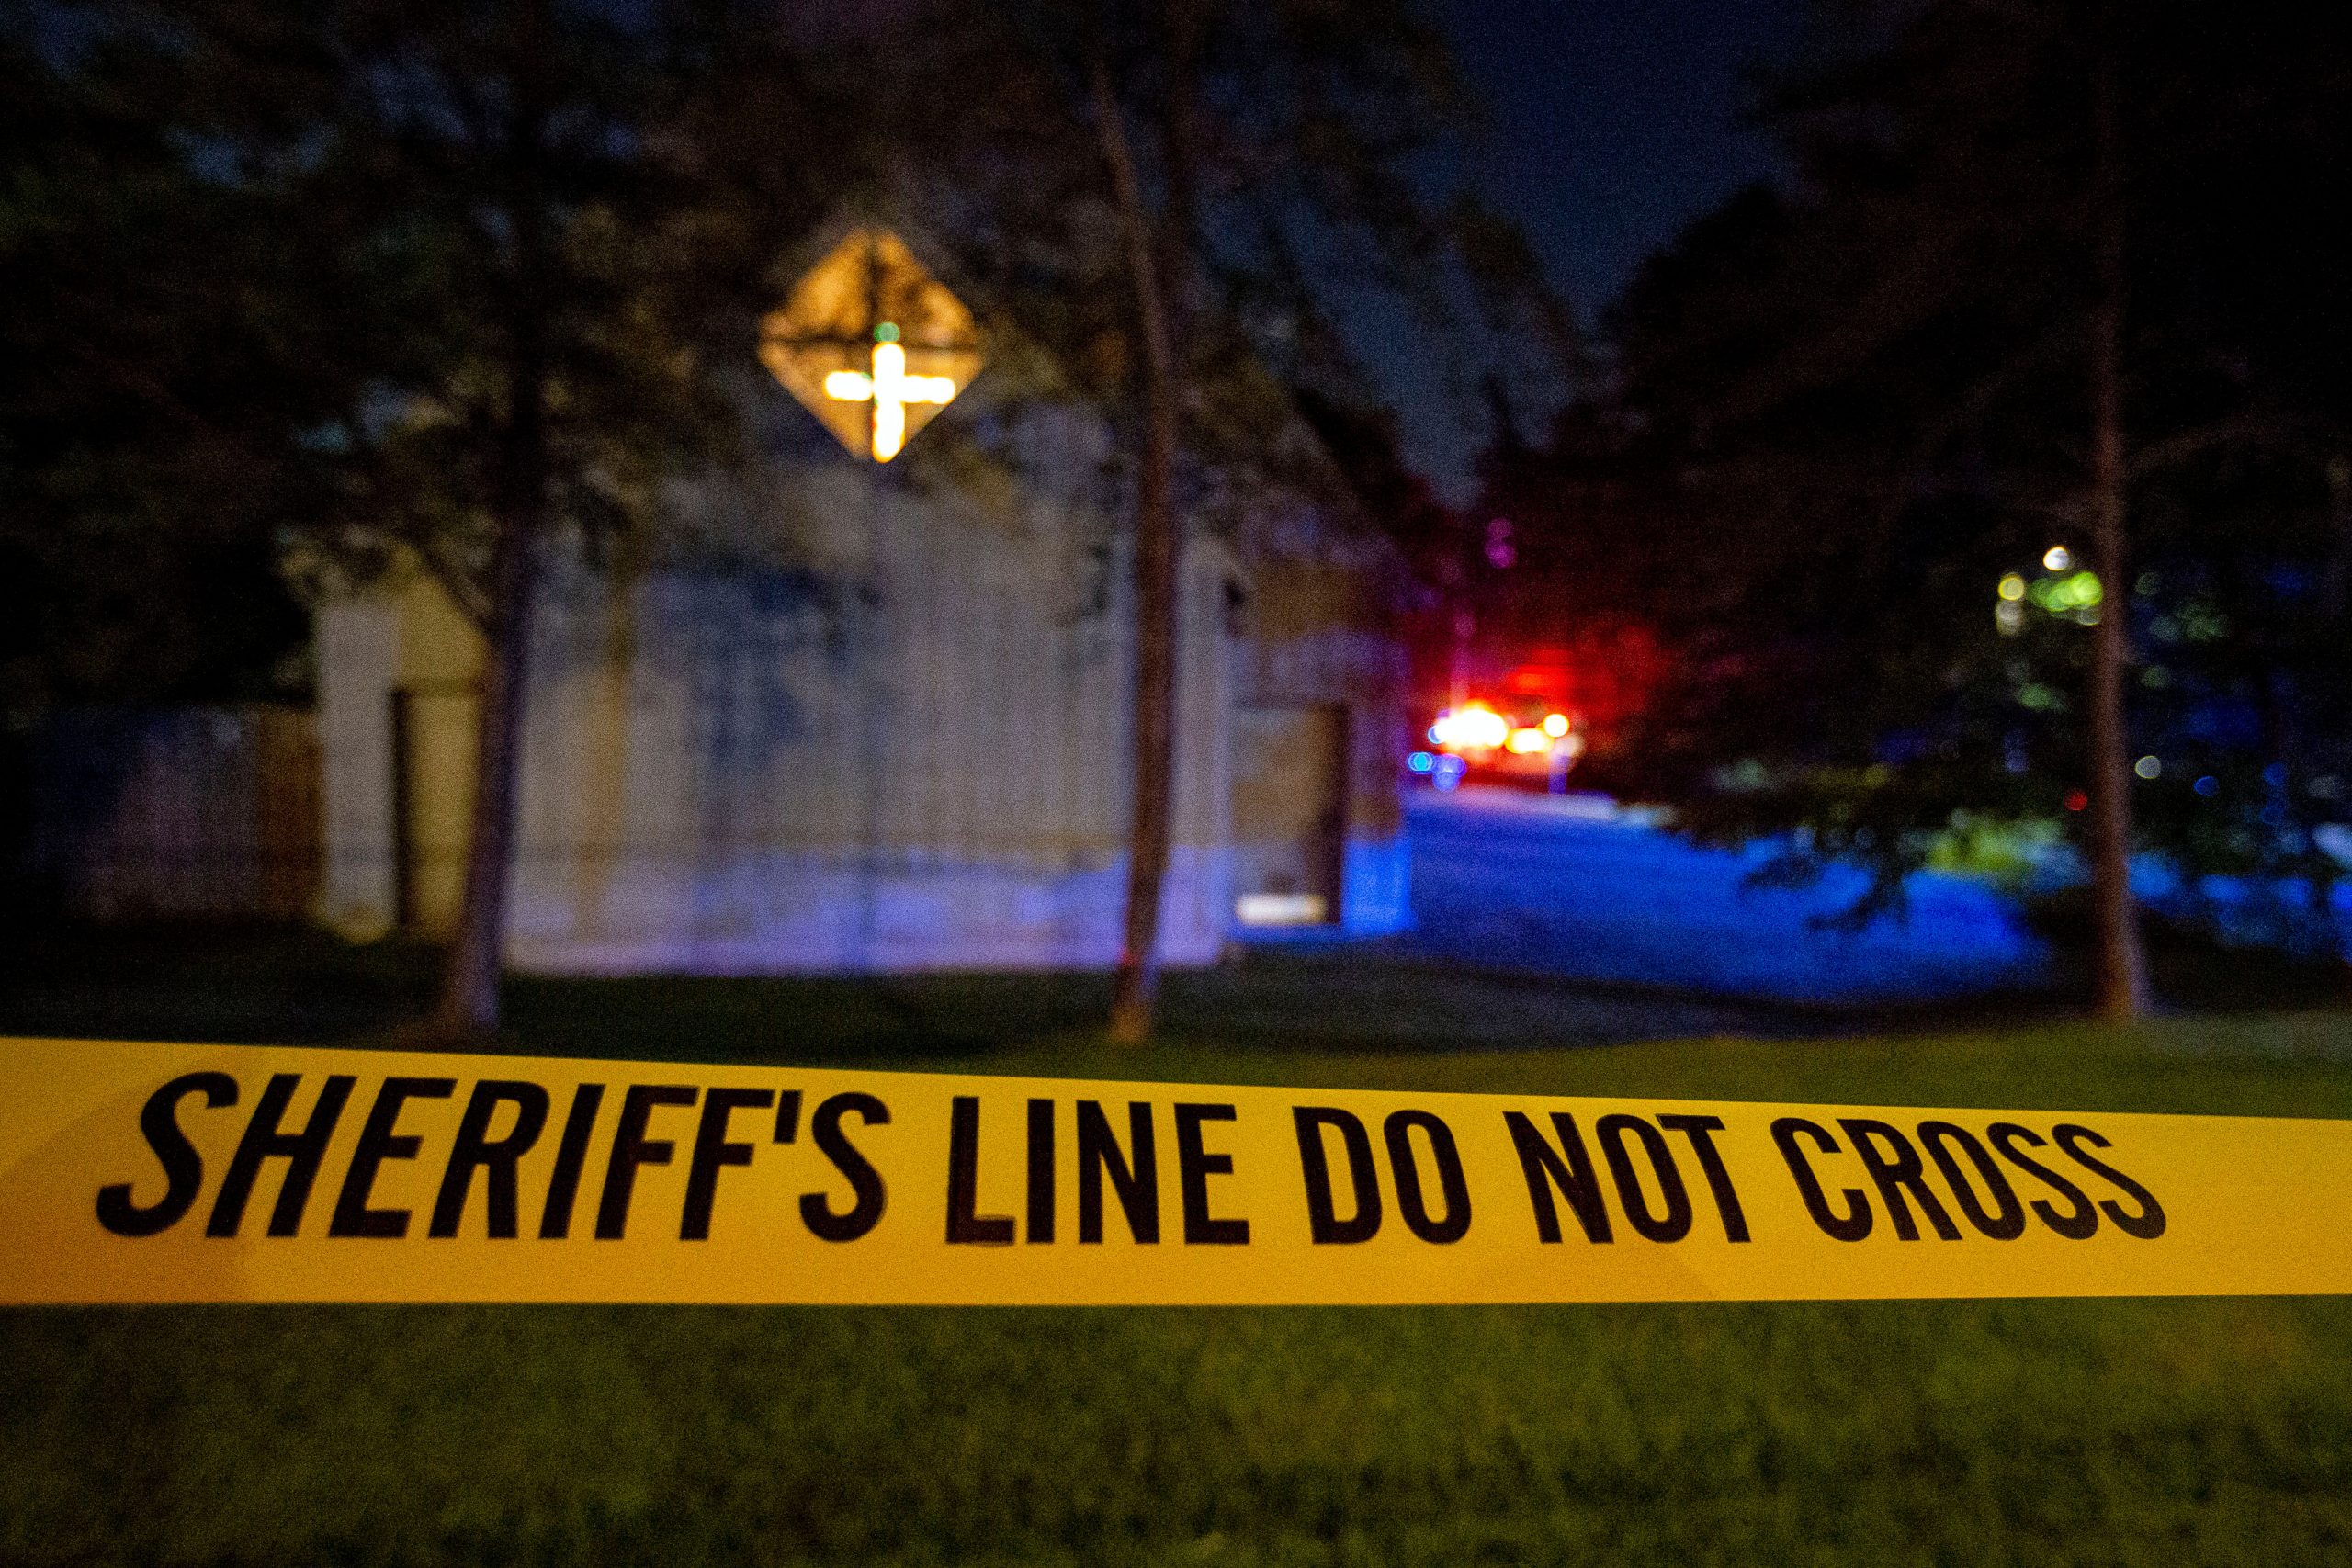 Norfolk, Virginia shooting: All we know so far